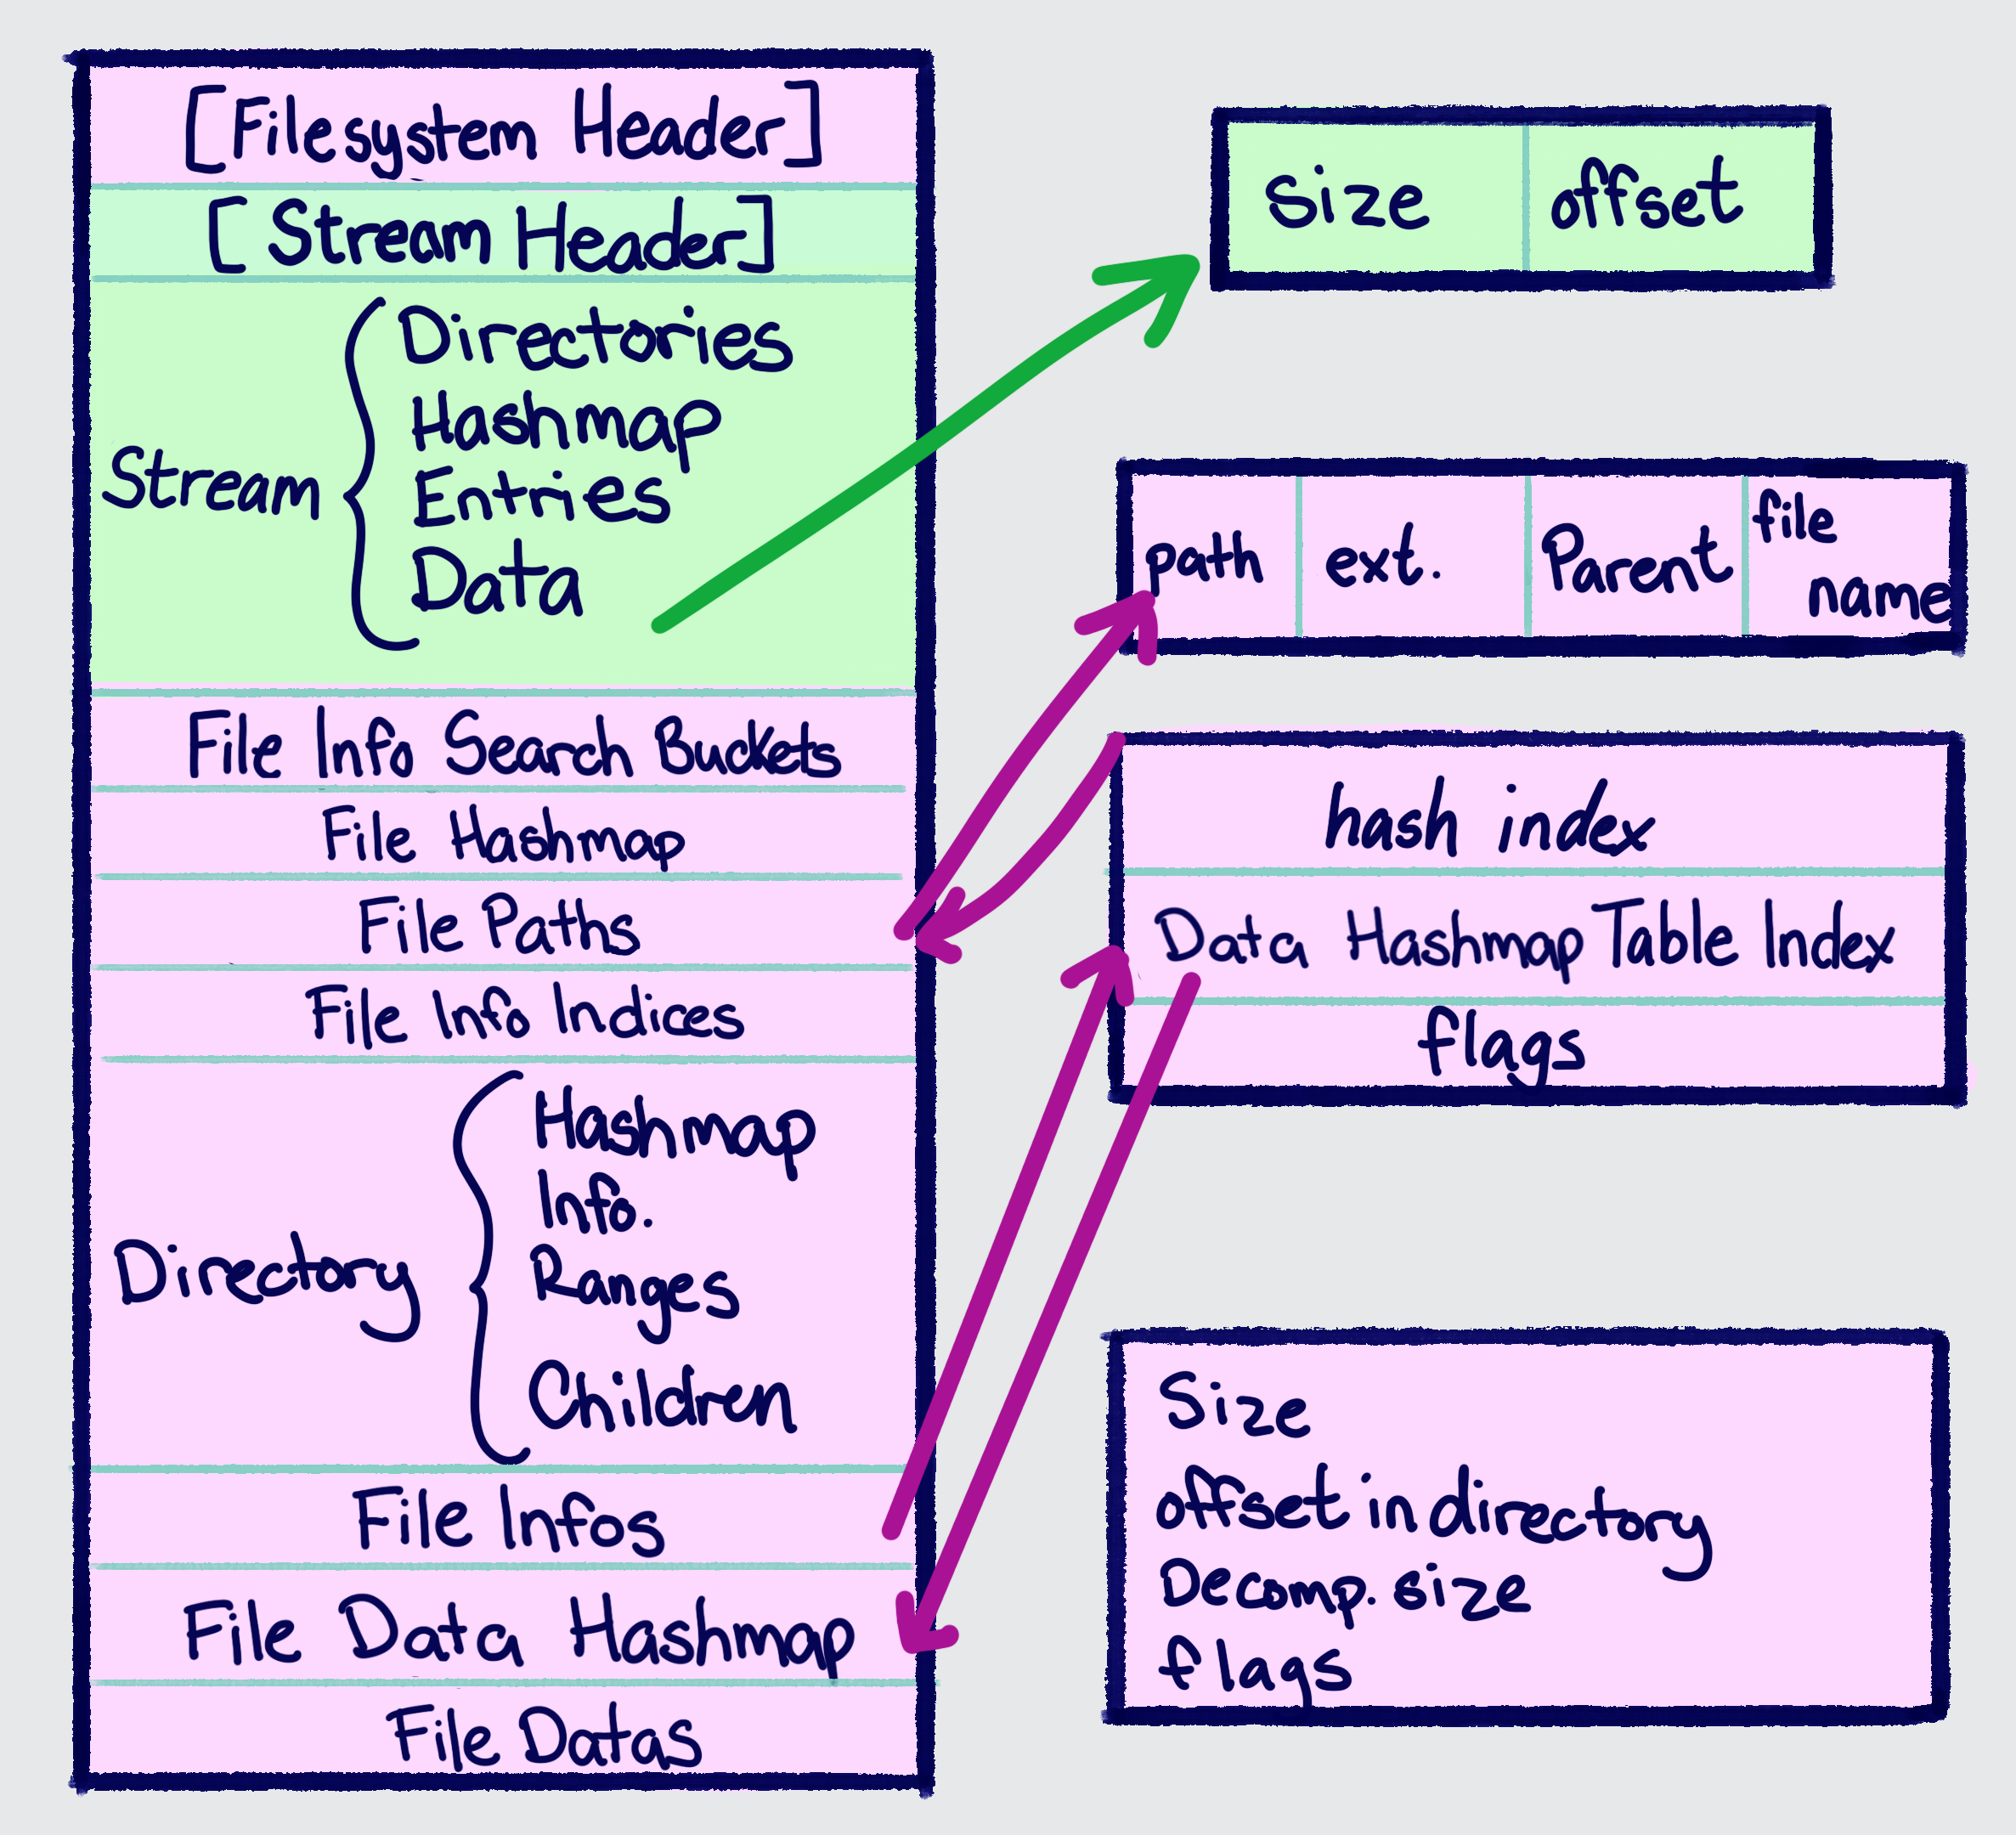 arc-diagram-filesystem.png